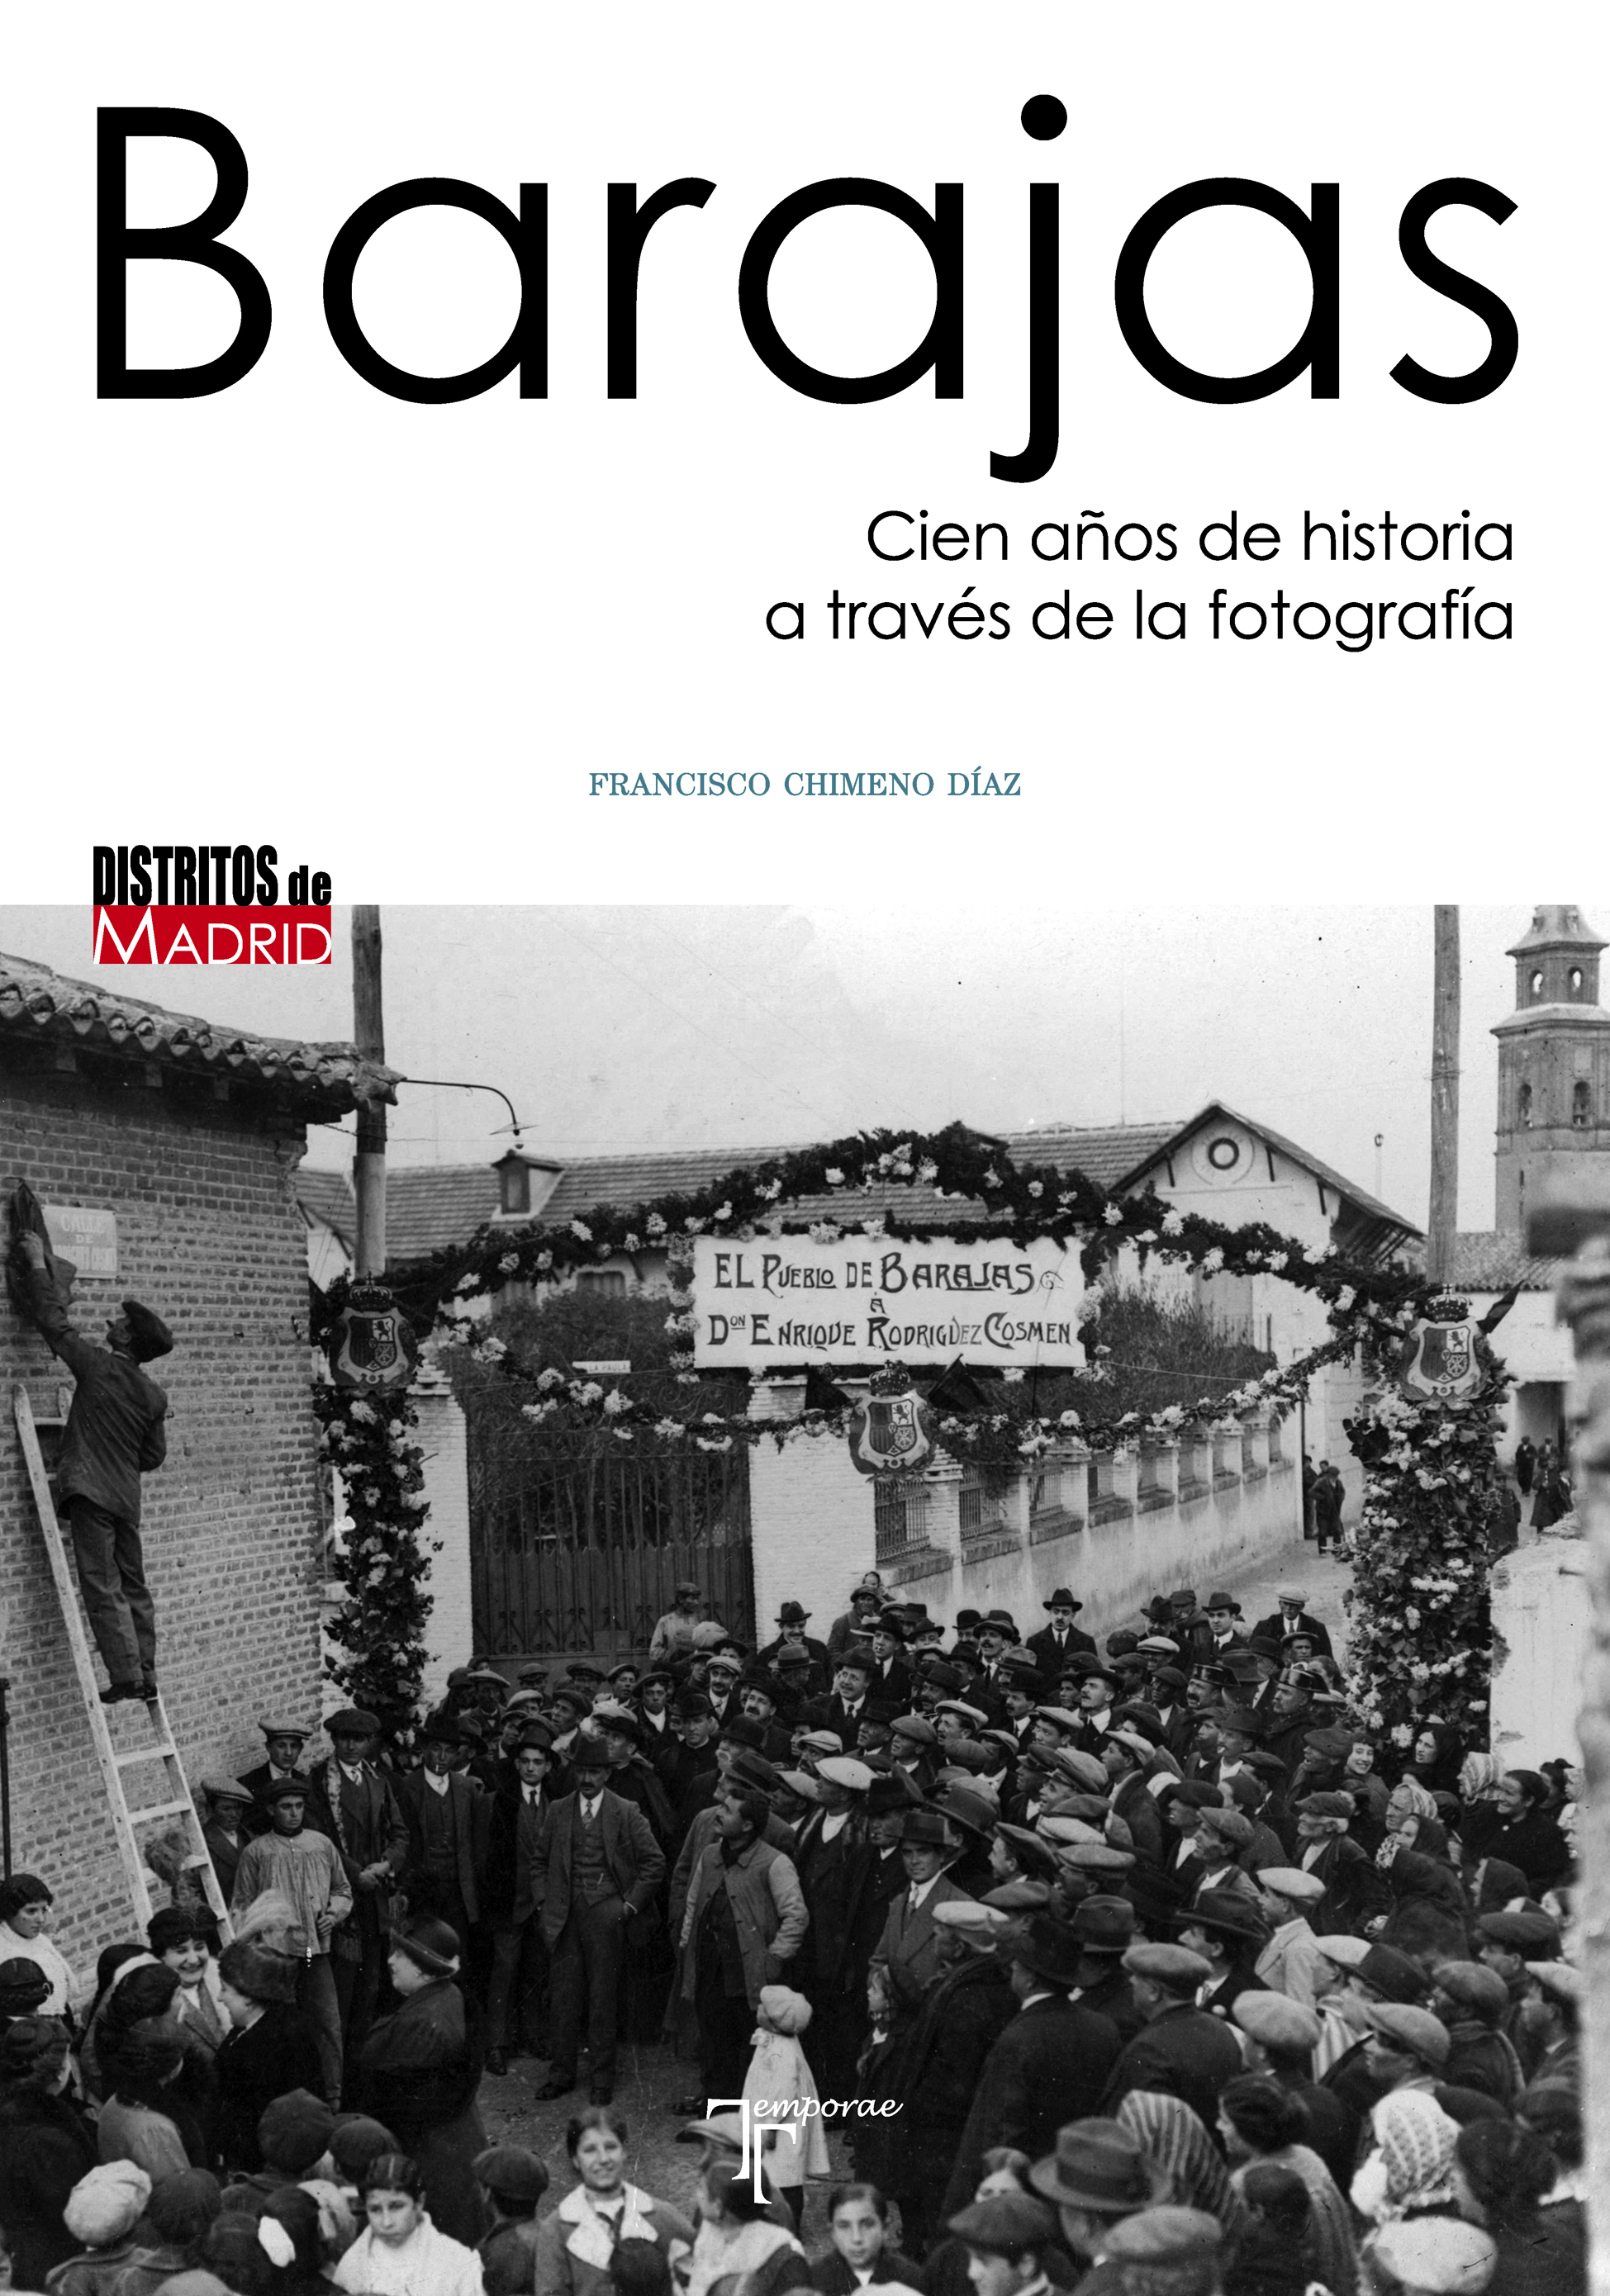 http://www.temporae.es/wp-content/uploads/2012/05/Cubierta-Barajas3.jpg